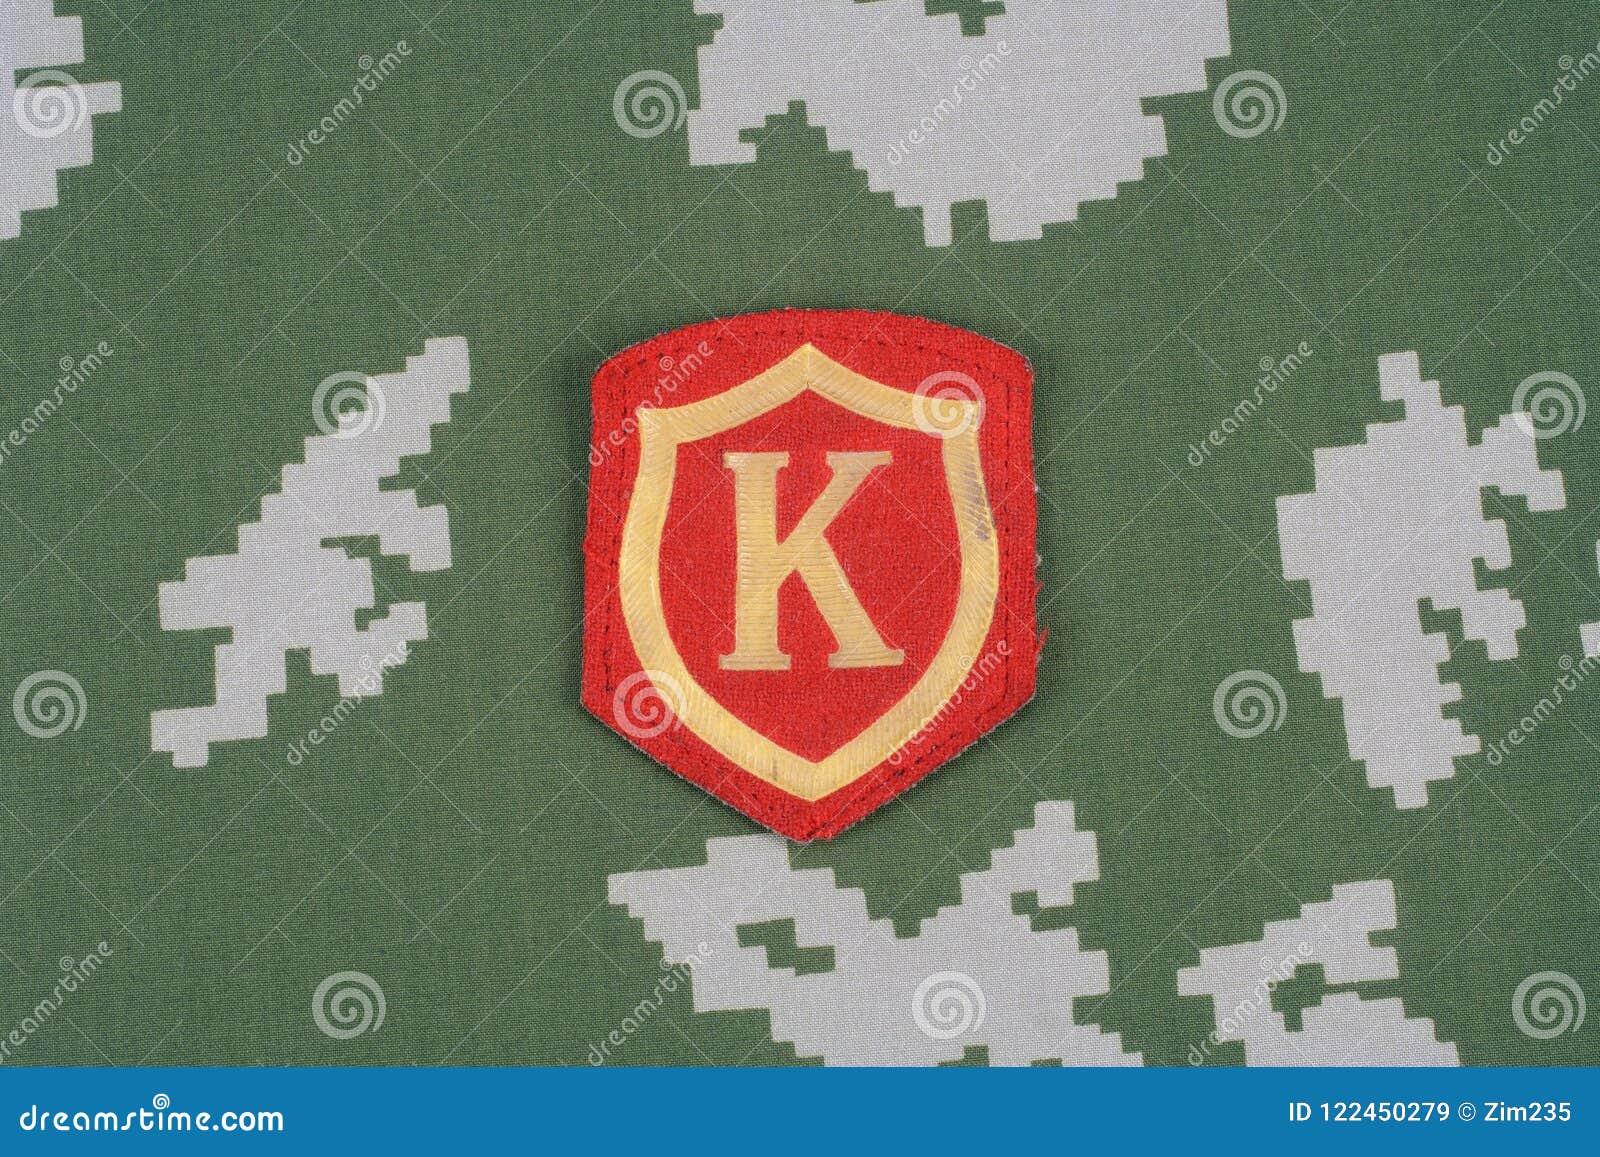 soviet army commandant shoulder patch on camouflage uniform